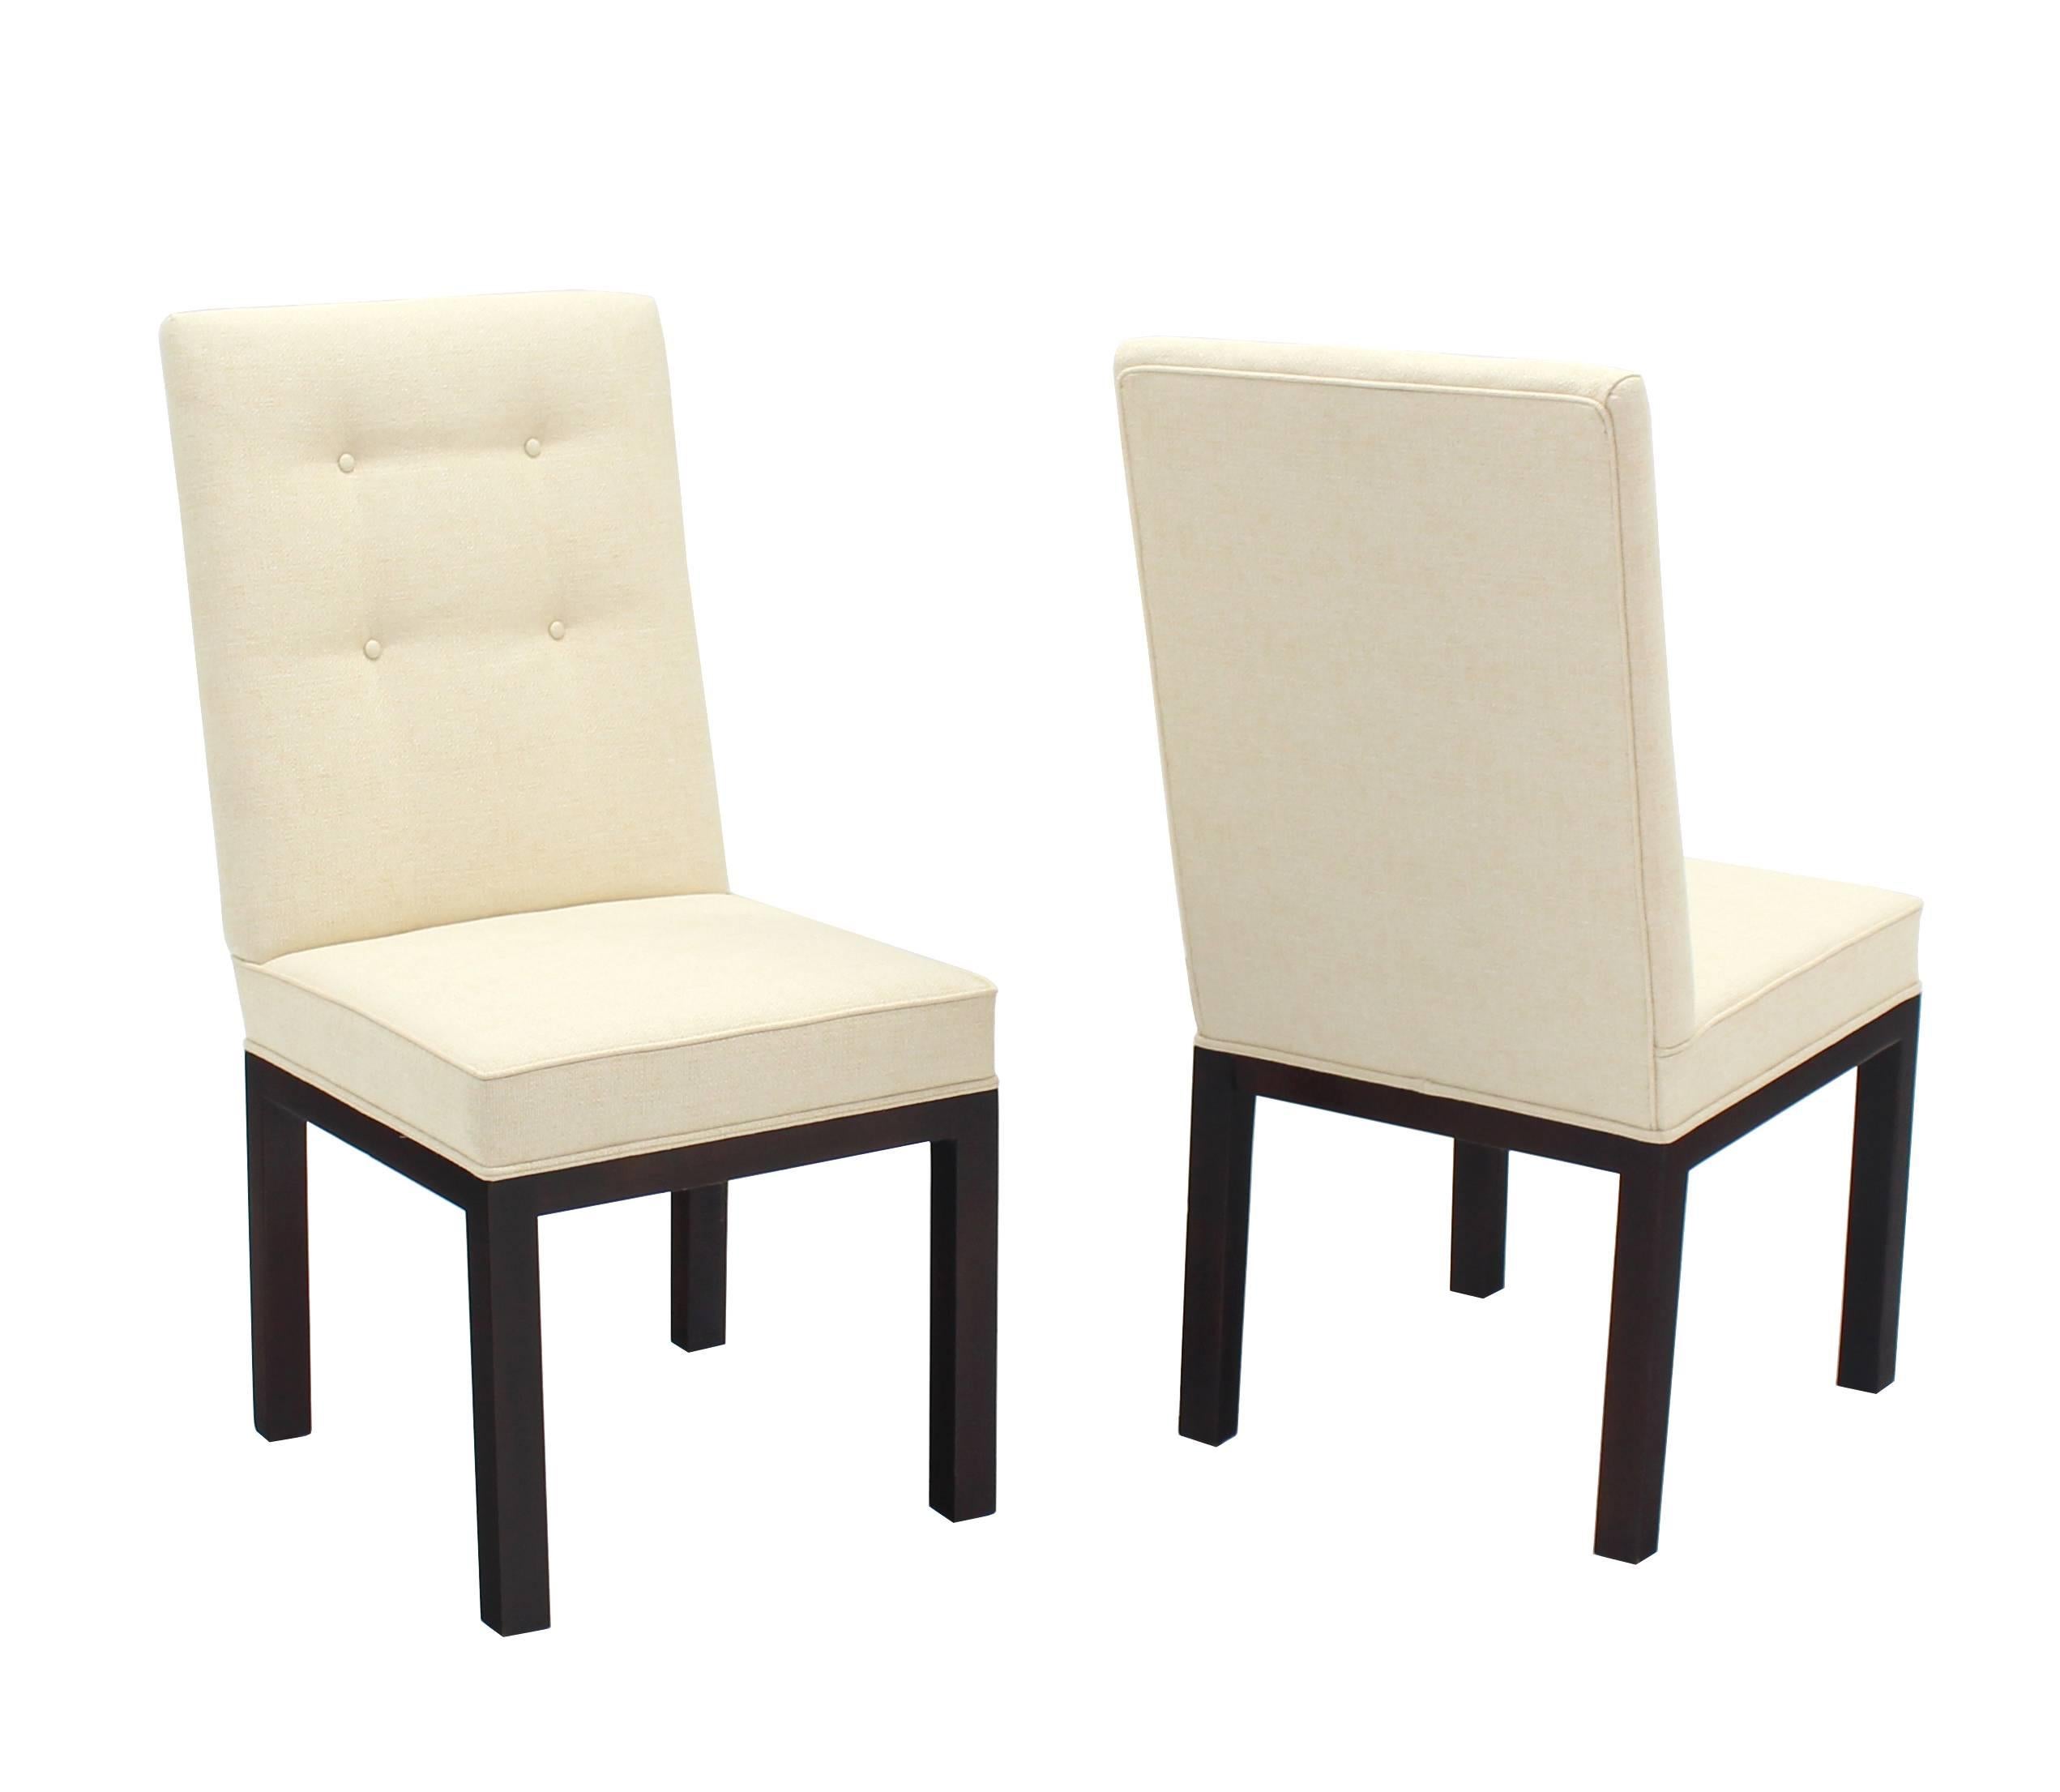 widdicomb chairs